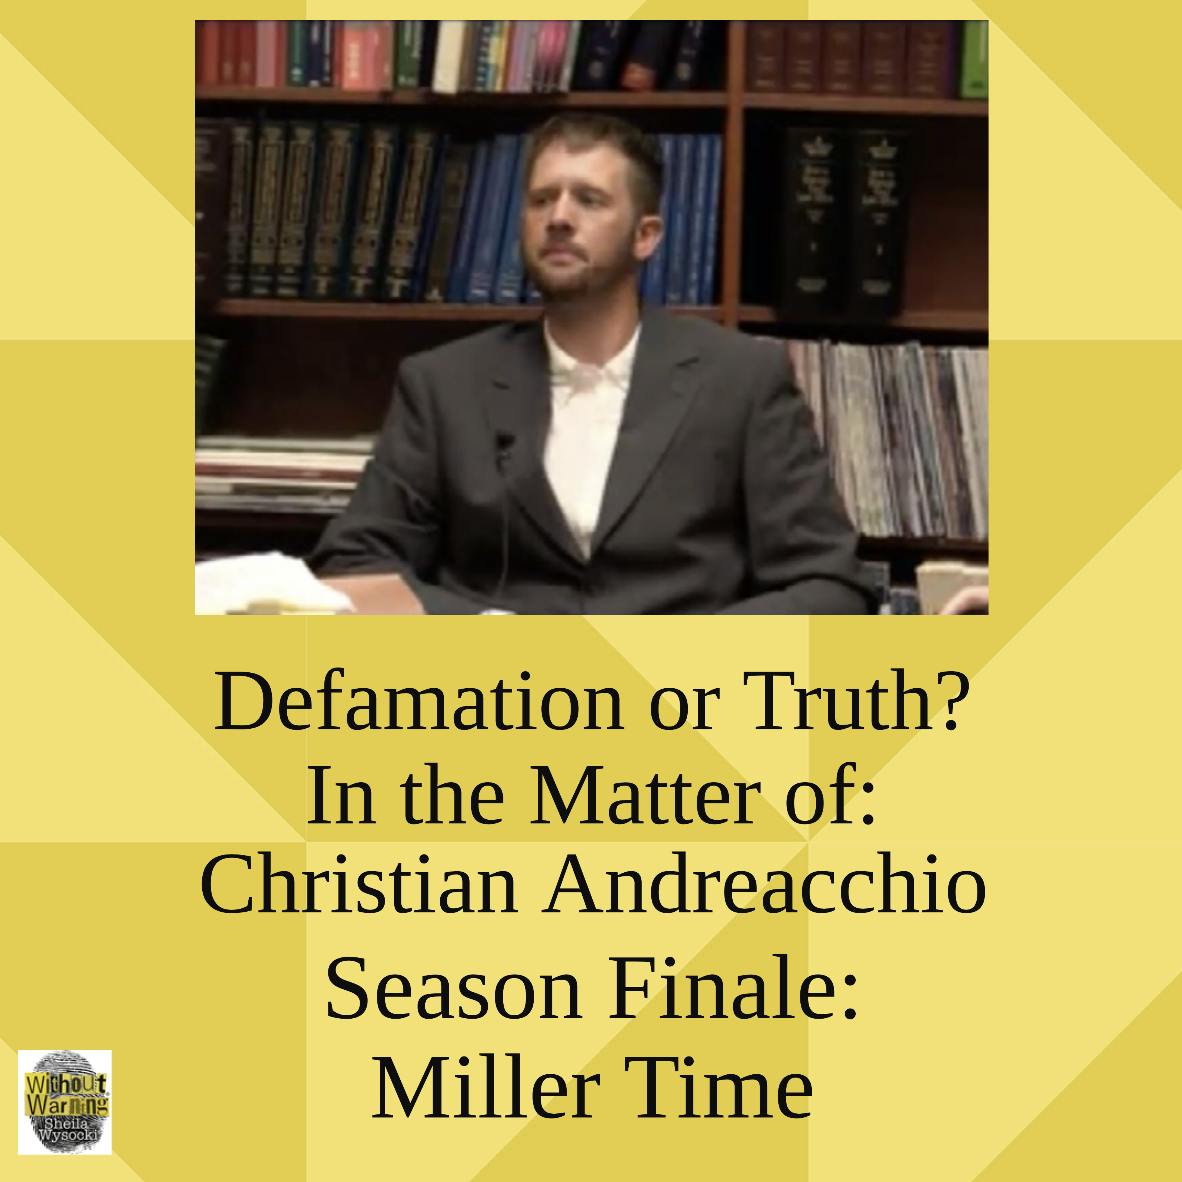 CHRISTIAN ANDREACCHIO CASE ~Miller Time